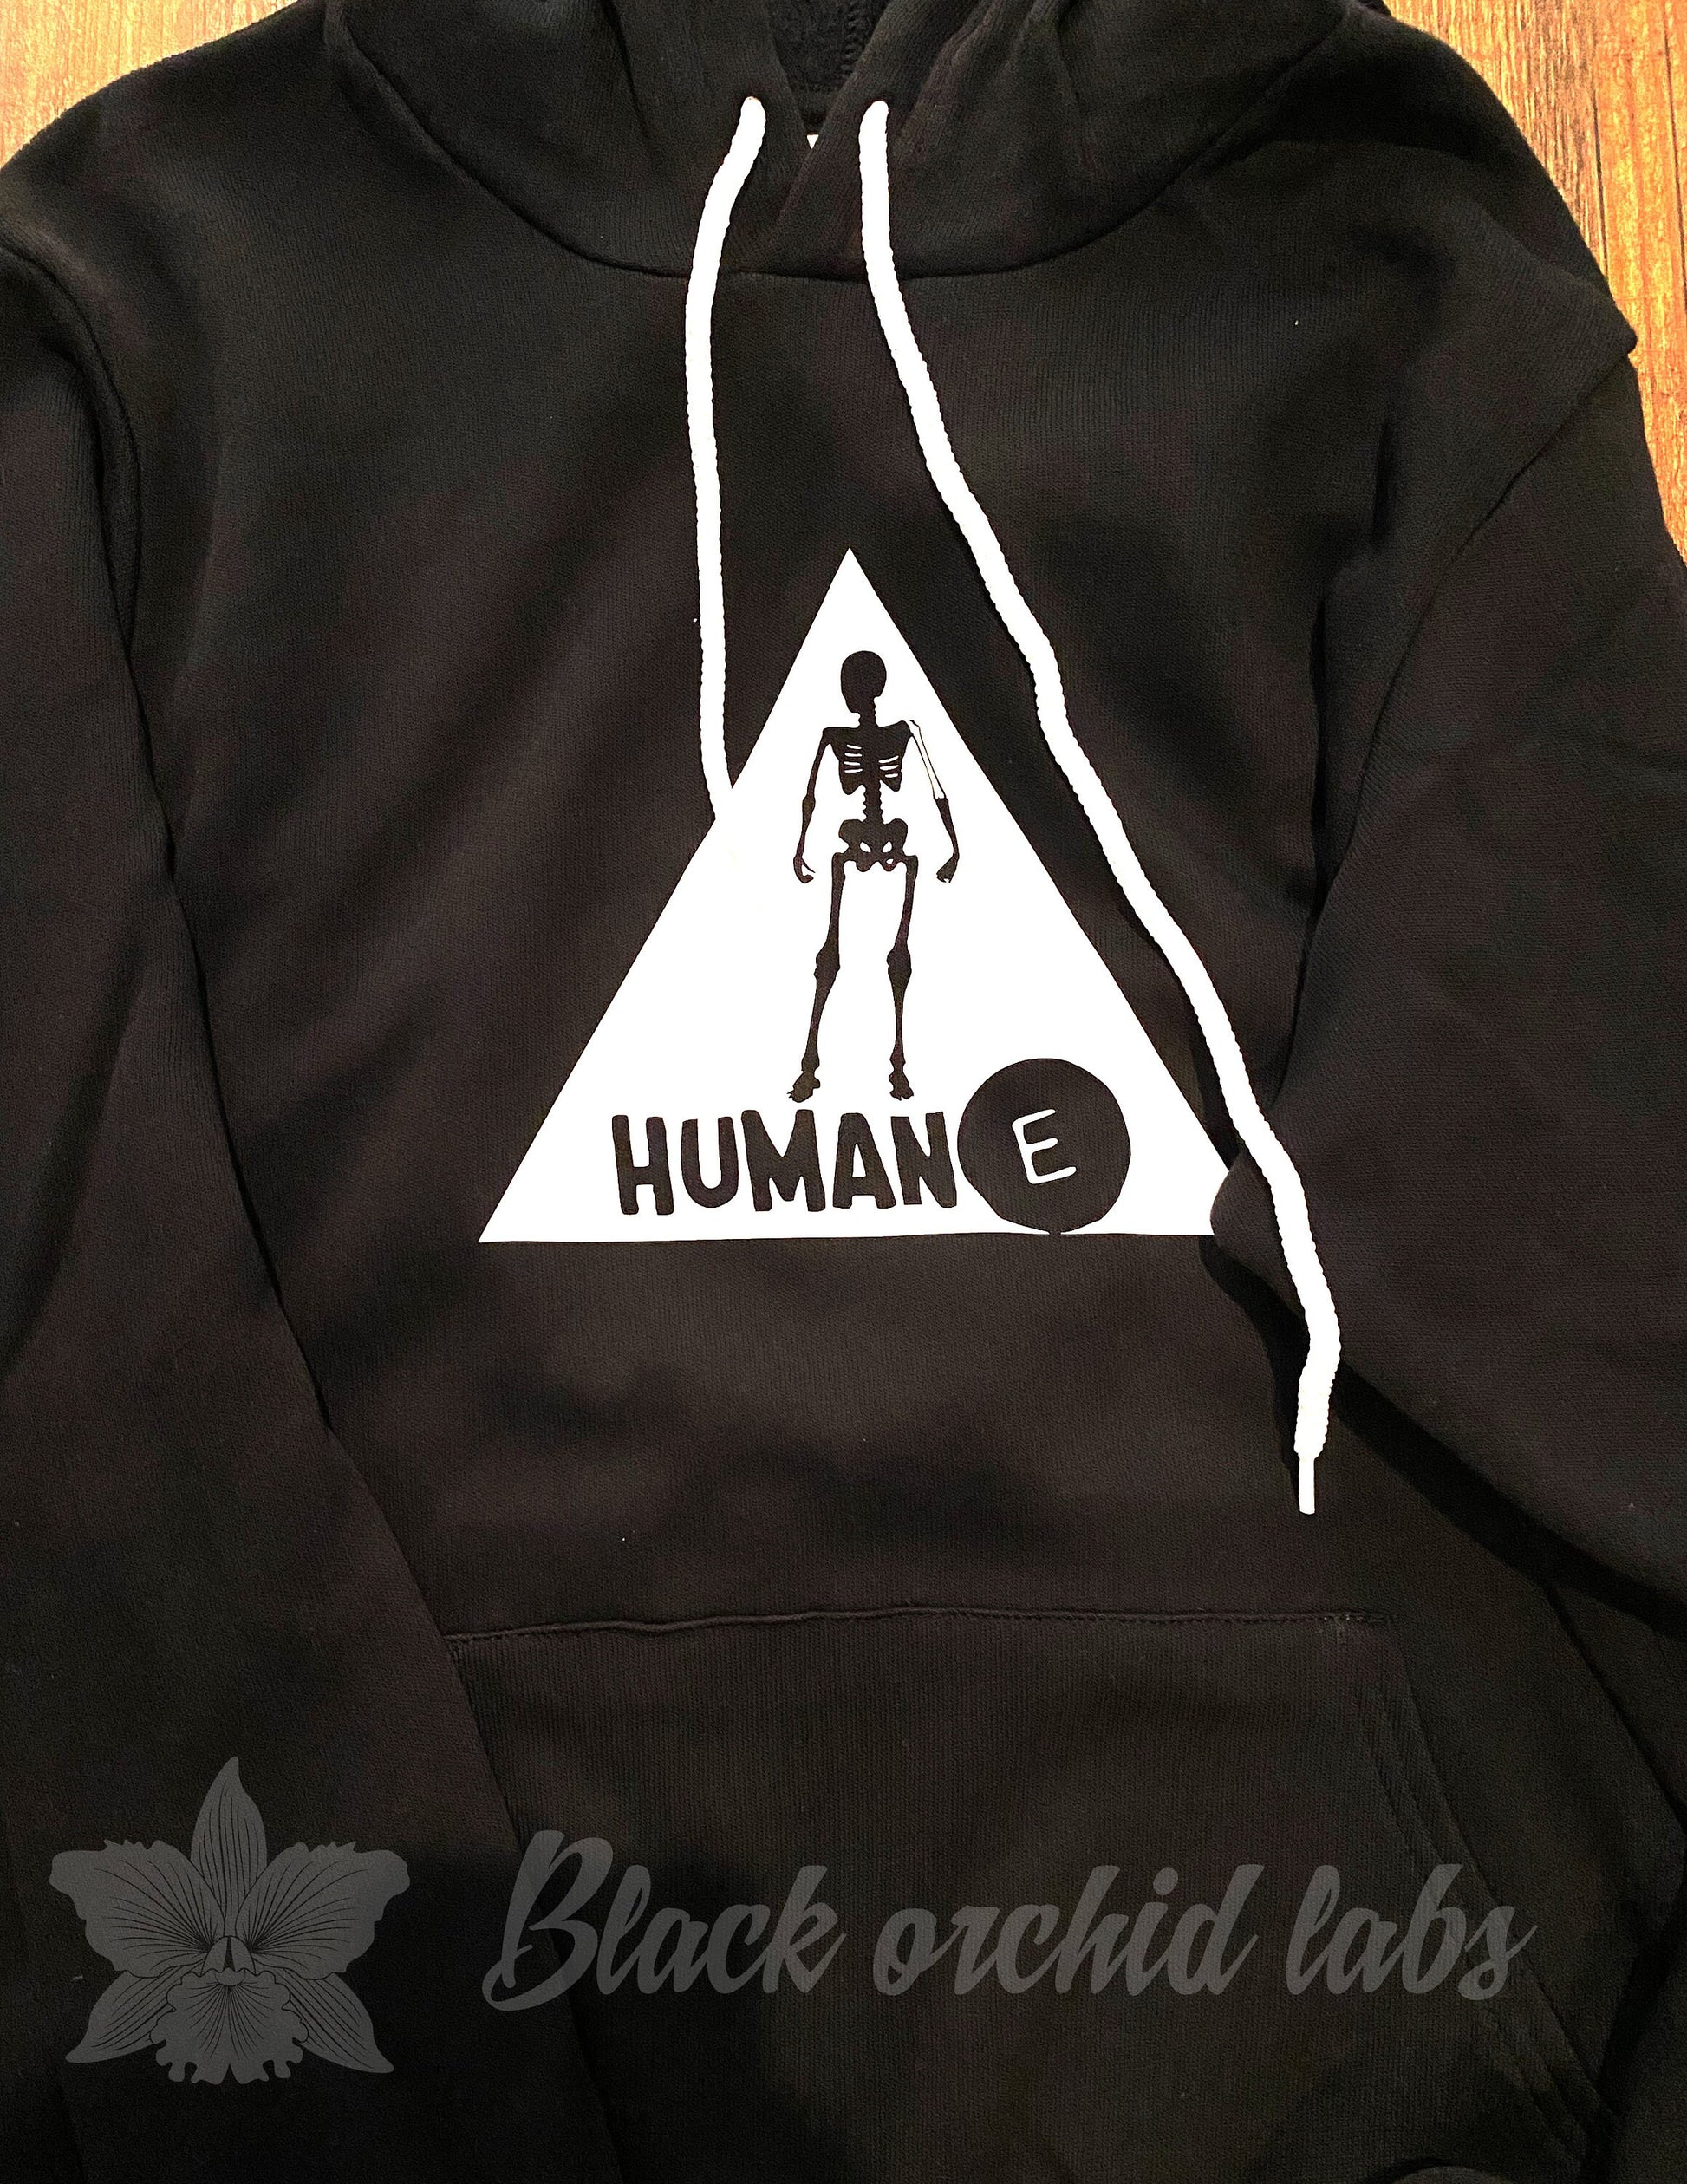 Humane Tank, T-shirt, Hoodie, or Tote